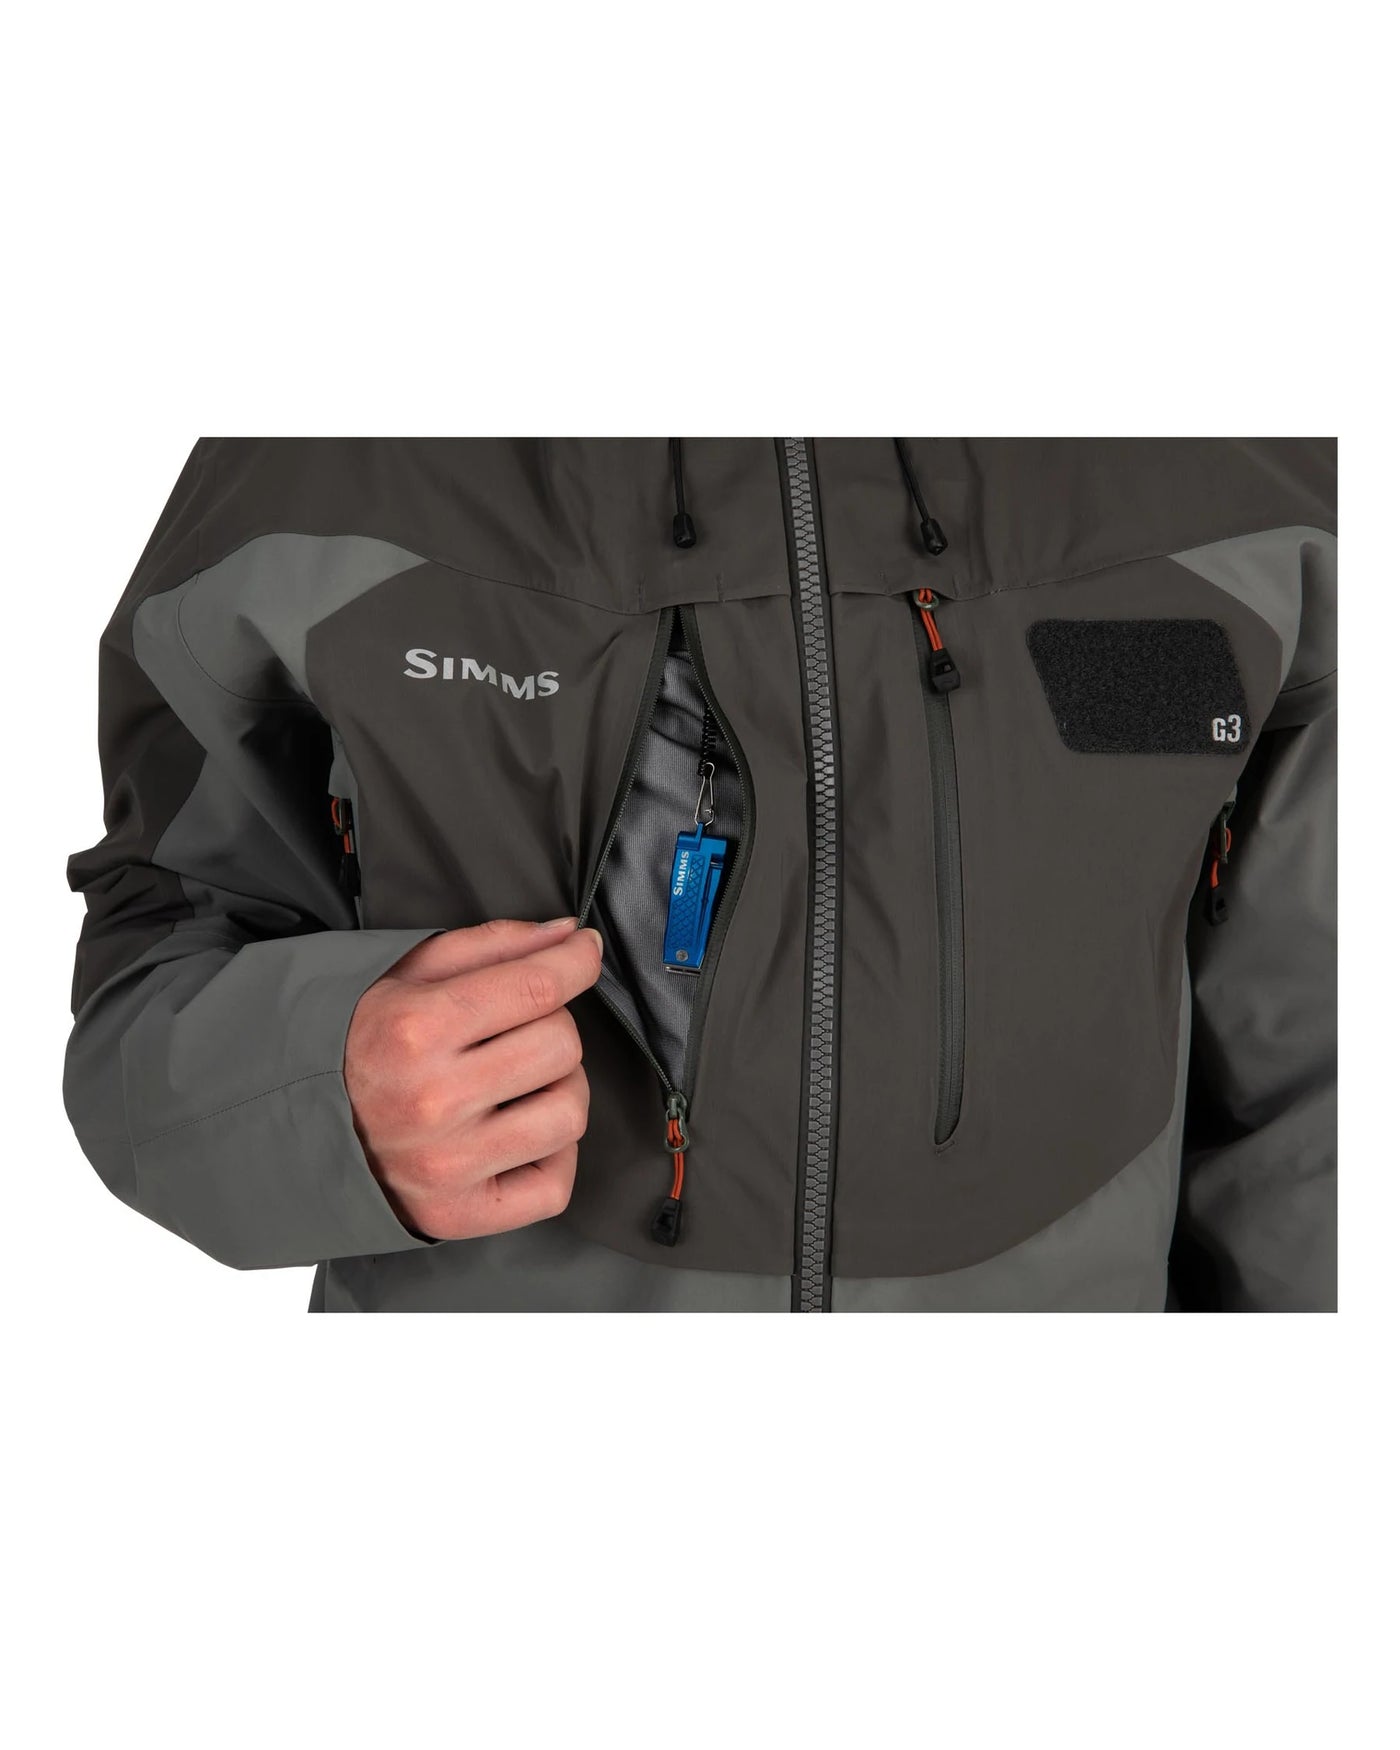 Item 842600 - Simms G3 guide jacket - Men's Rain Jackets - Siz